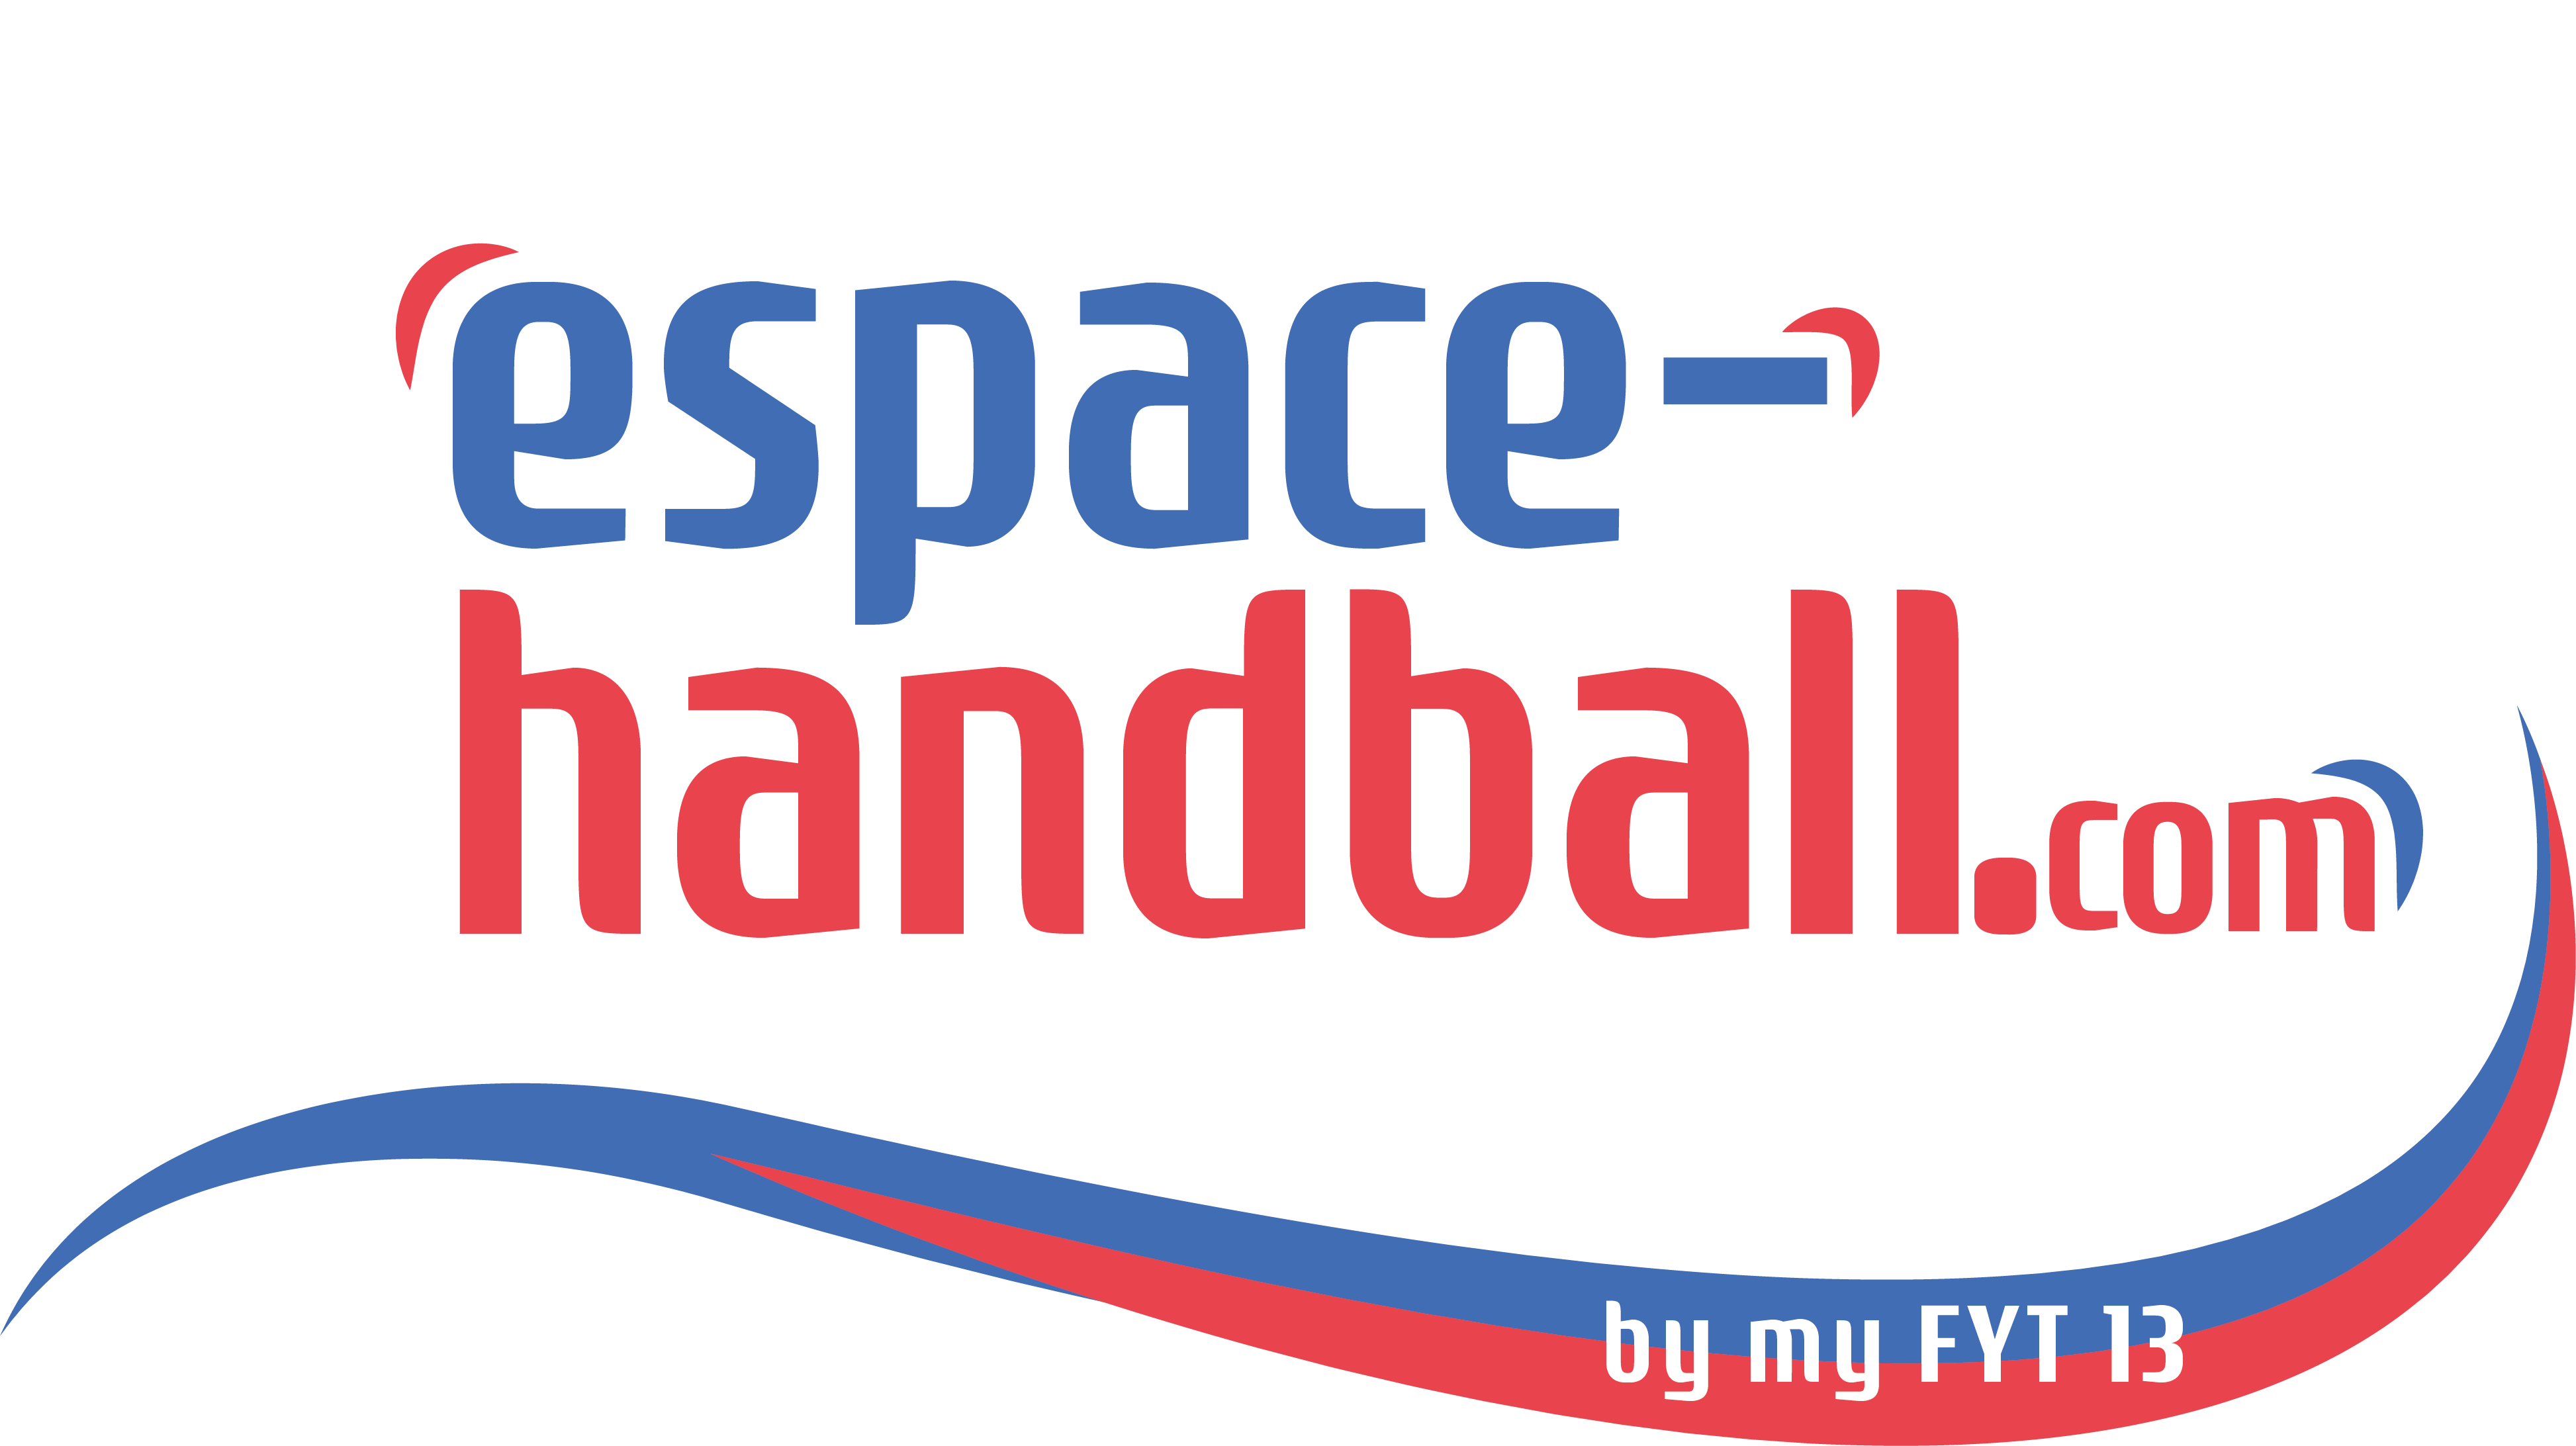 ESPACE HANDBALL (MyFyt13)